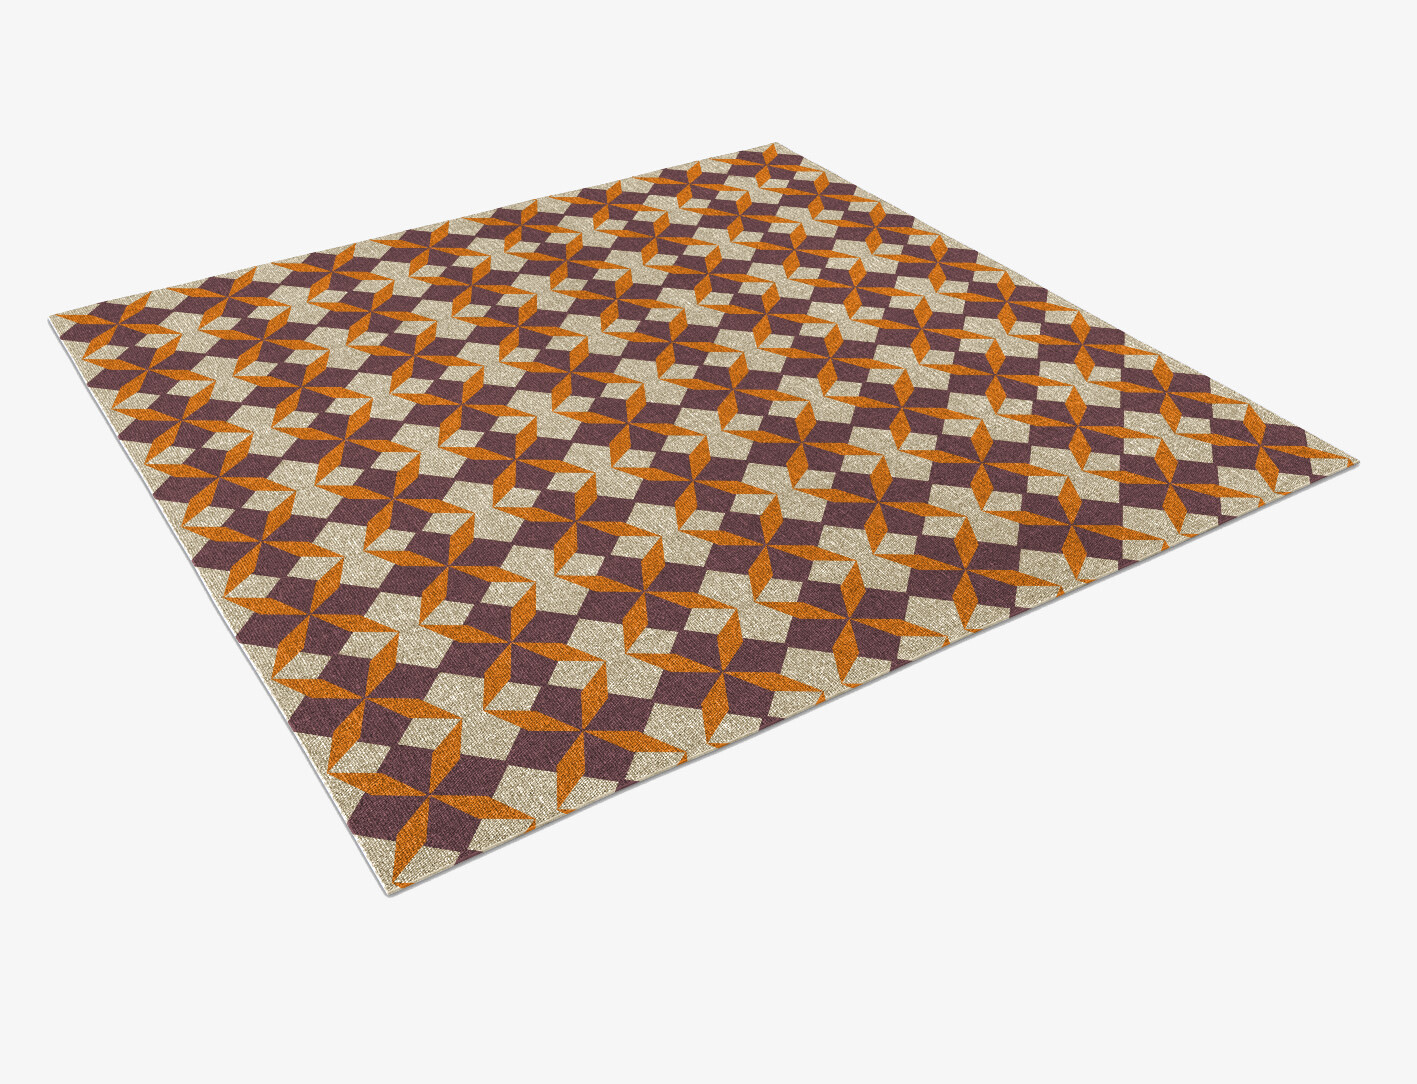 Arabesque Geometric Square Outdoor Recycled Yarn Custom Rug by Rug Artisan